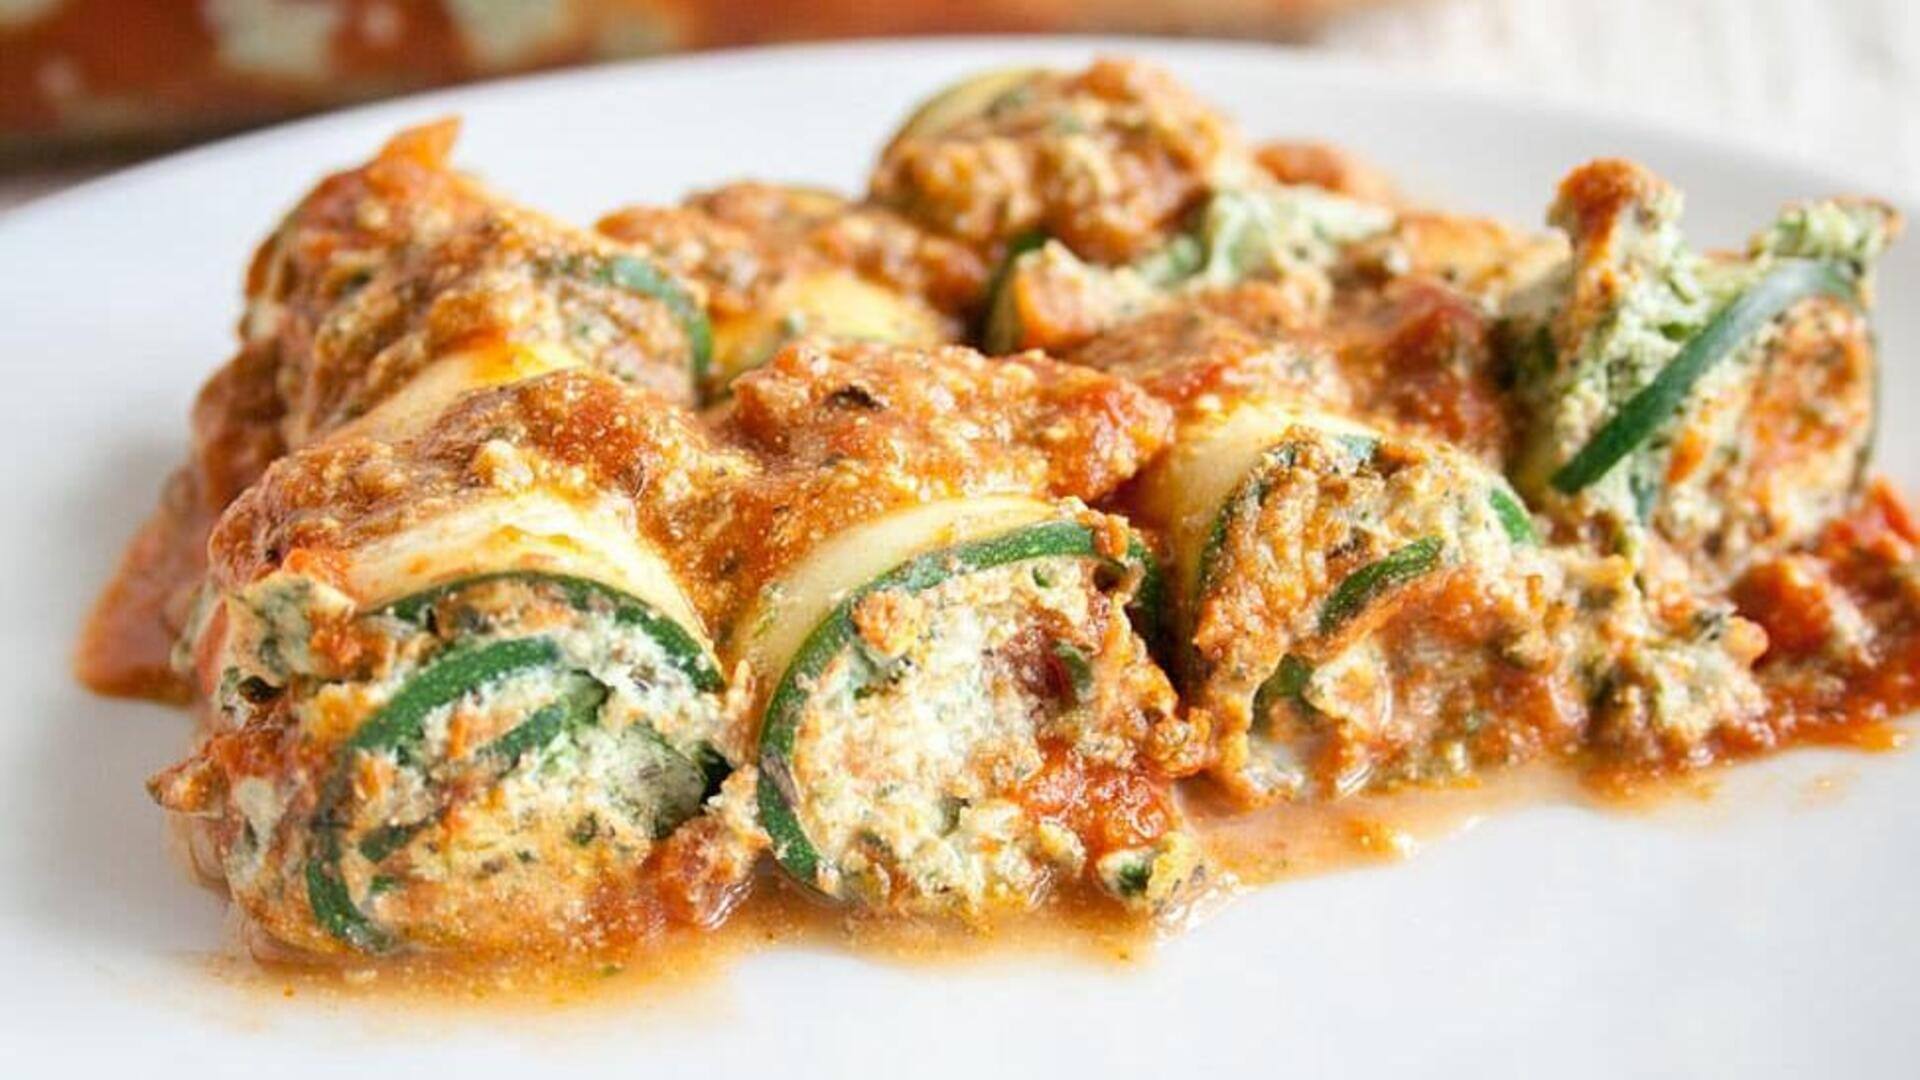 Now make zesty Zucchini Lasagna Rolls easily